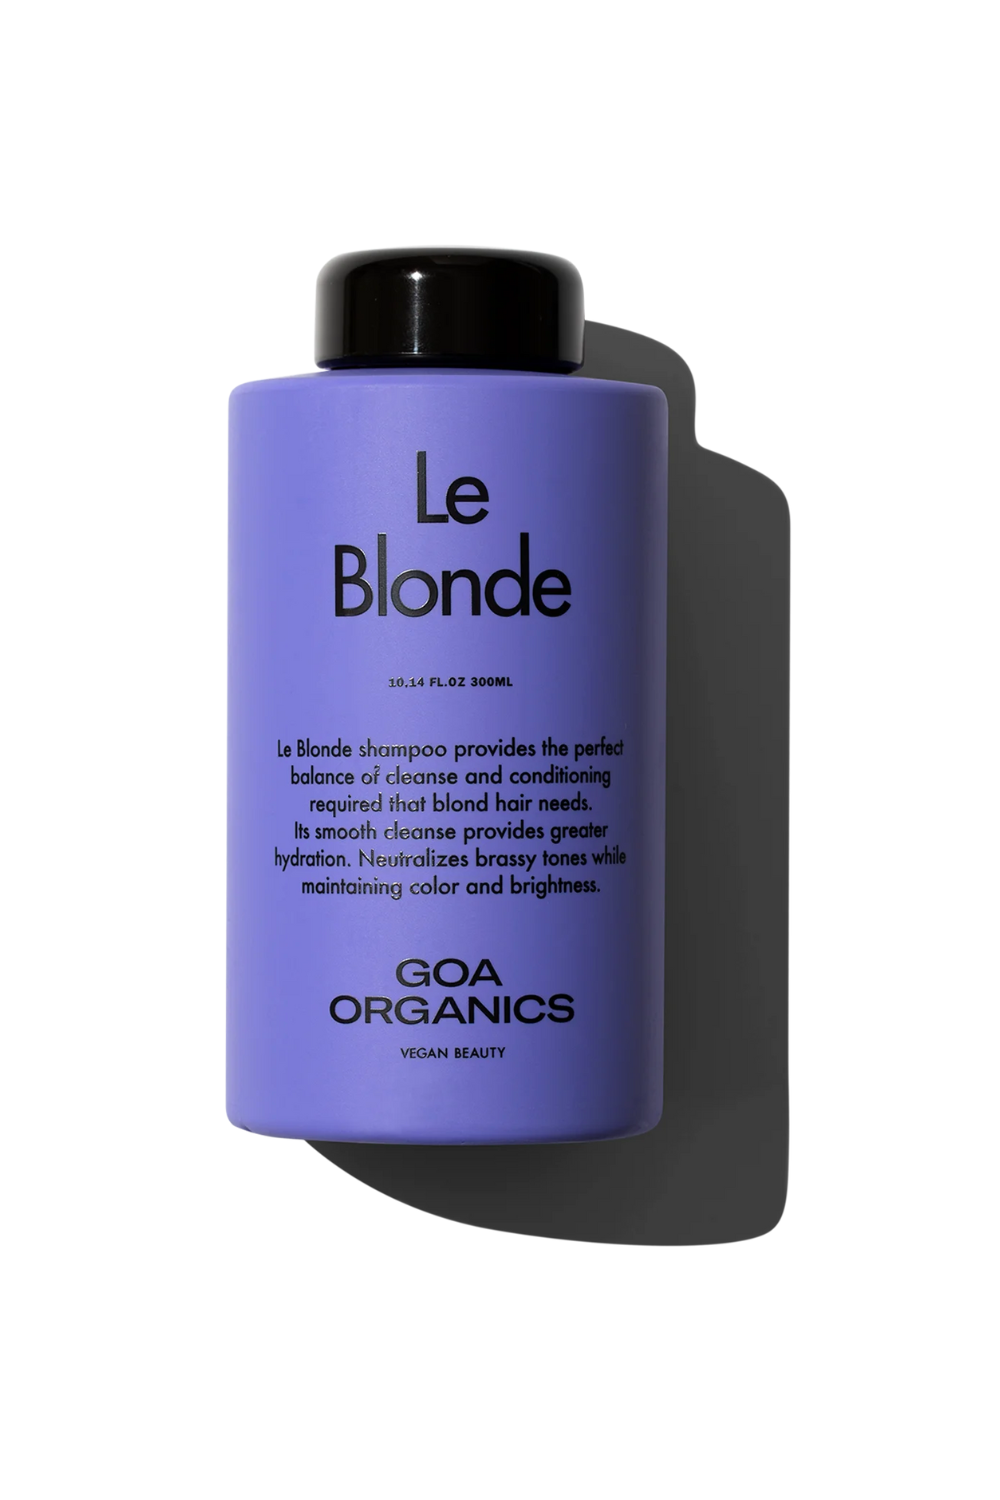 Le Blonde Shampoo de Goa Organics 